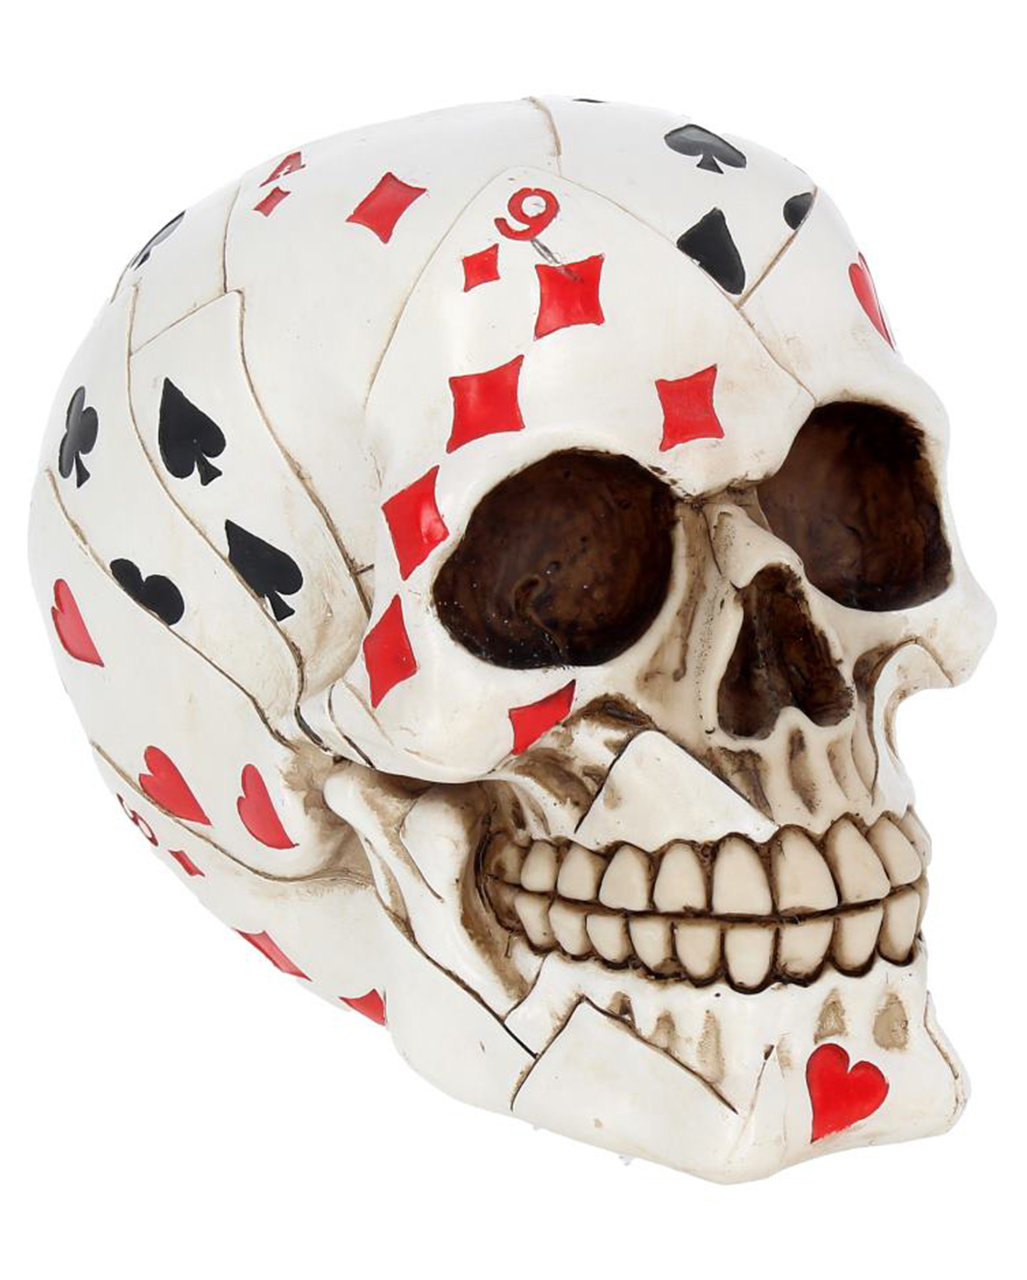 totenkopf mit pokerkarten design totenschaedel mit spielkarten motiv dead mans hand skull 17099 01